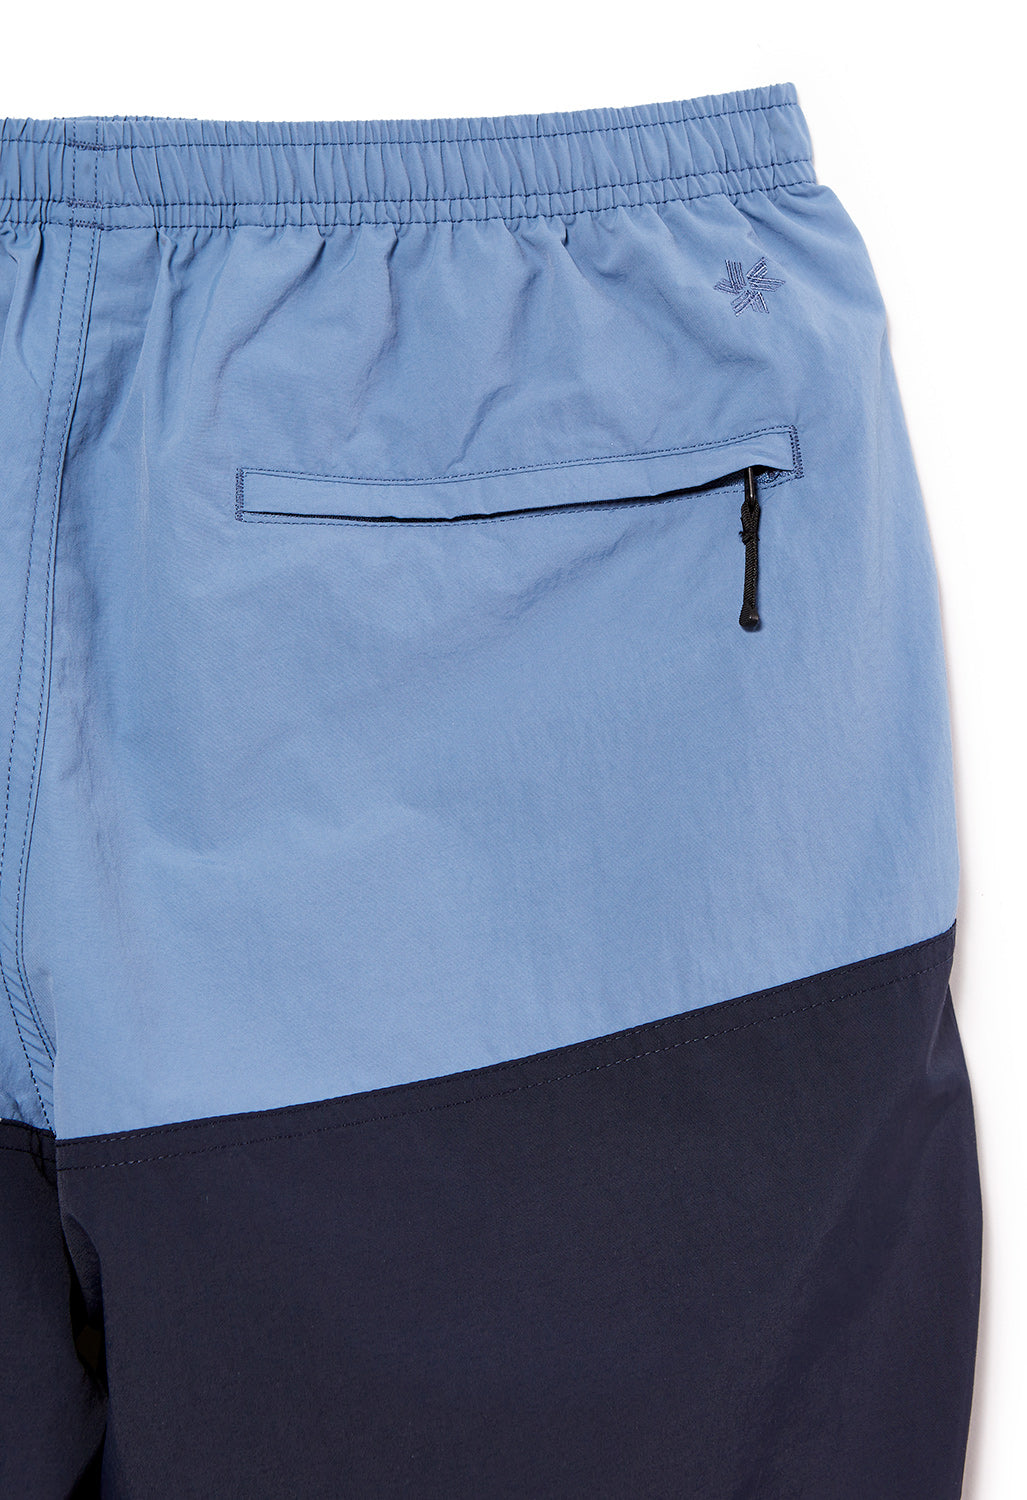 Goldwin Men's Nylon Bicolor Shorts 7" - Horizon Blue/Ink Navy